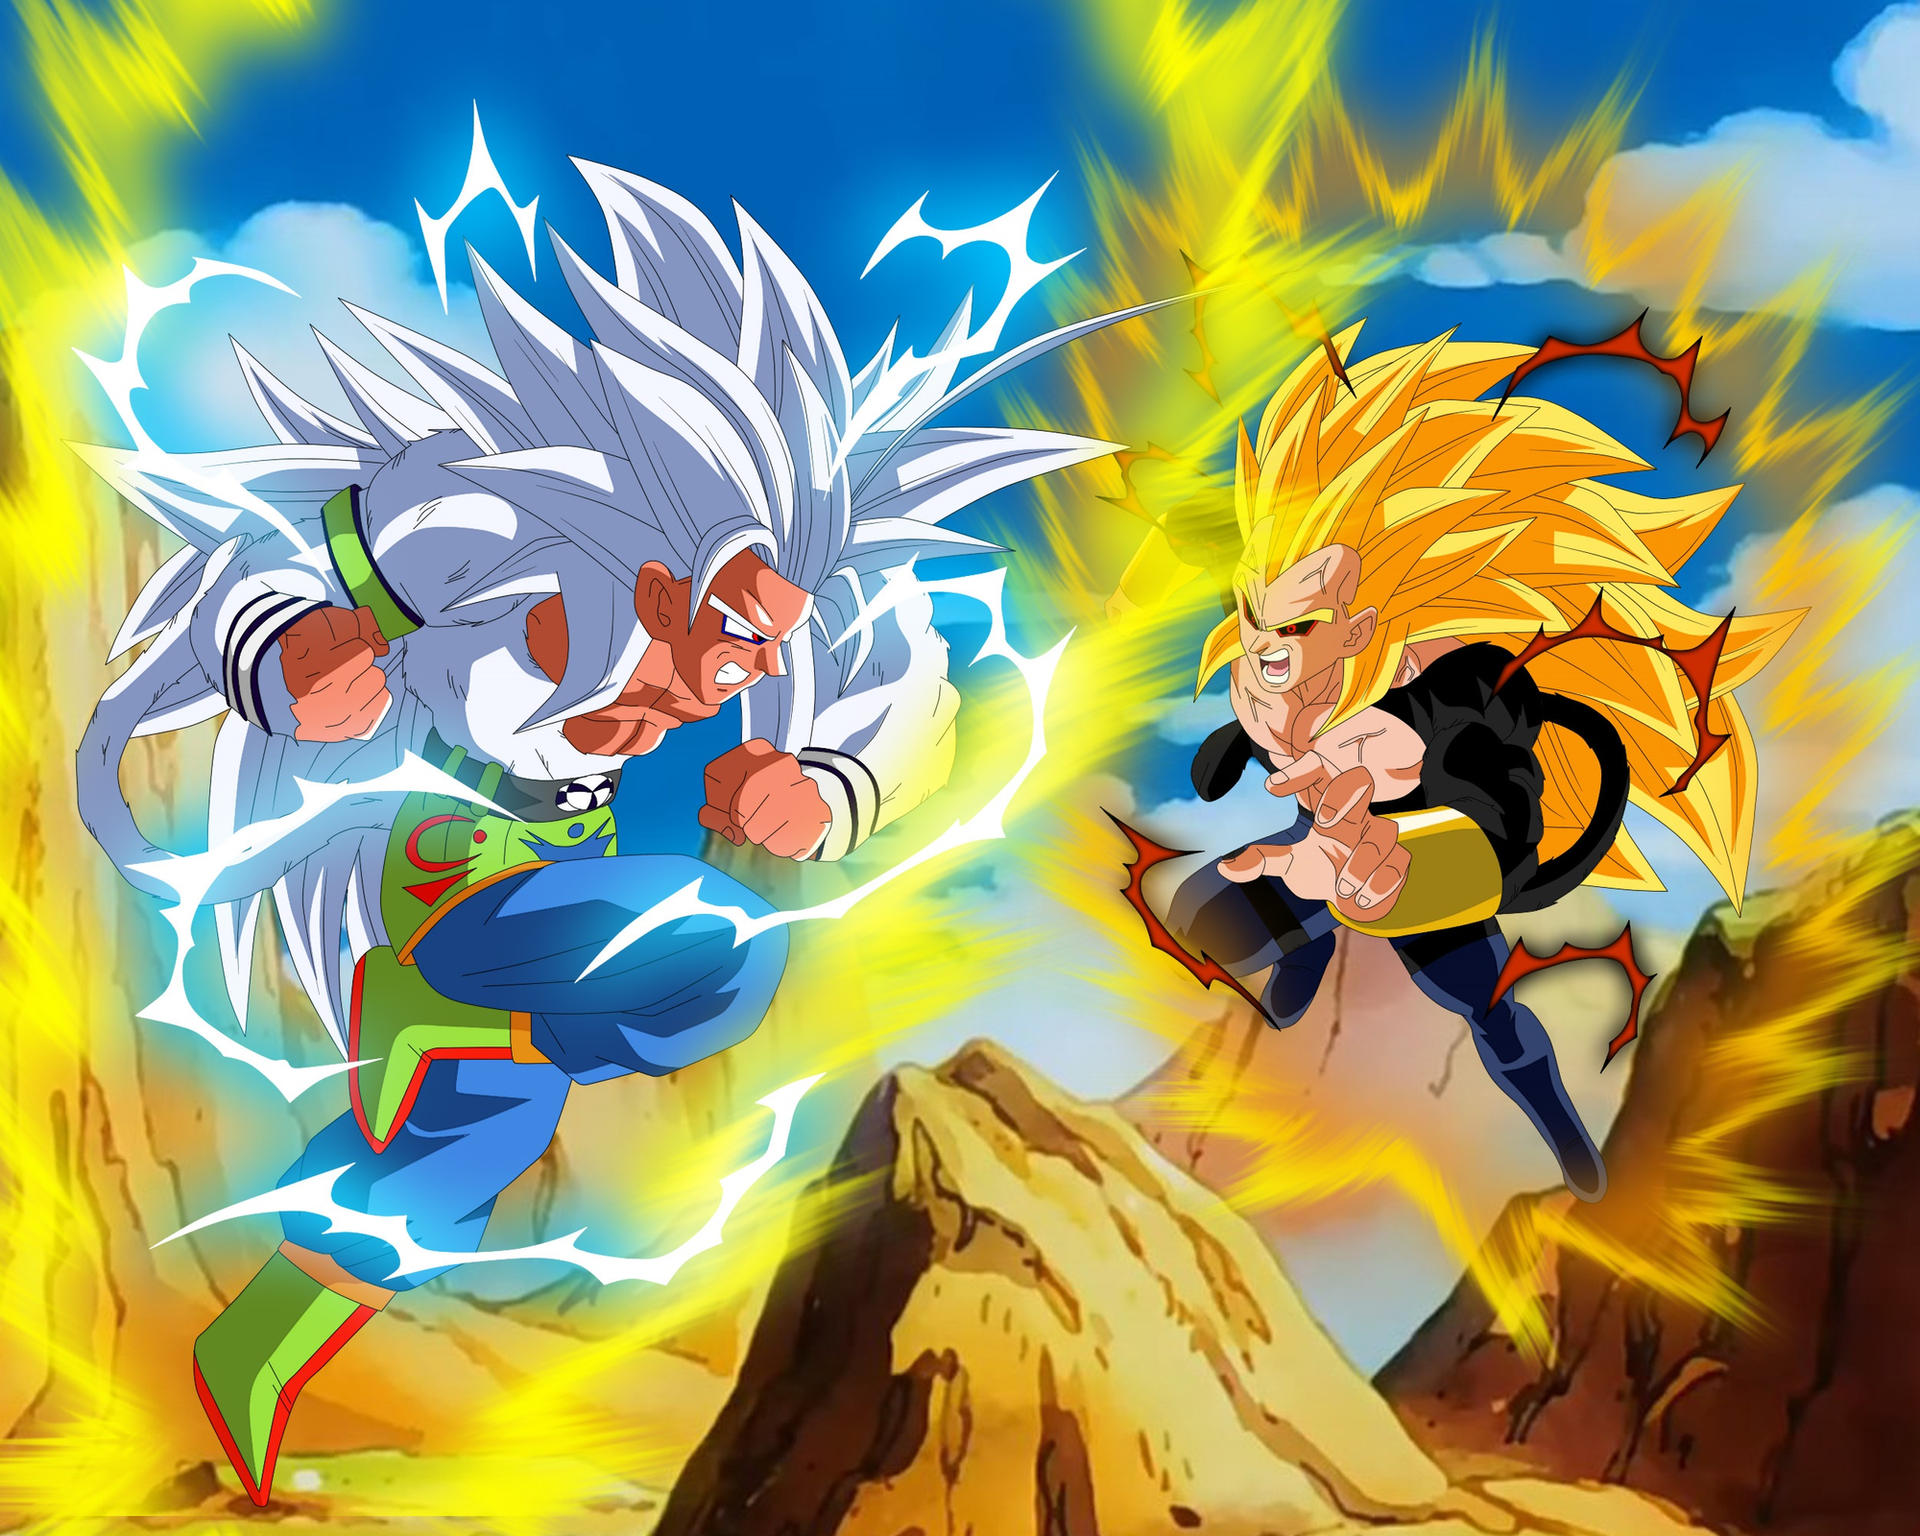 Goku SSJ5 vs Vegeta SSJ5 by Jtyeah on DeviantArt